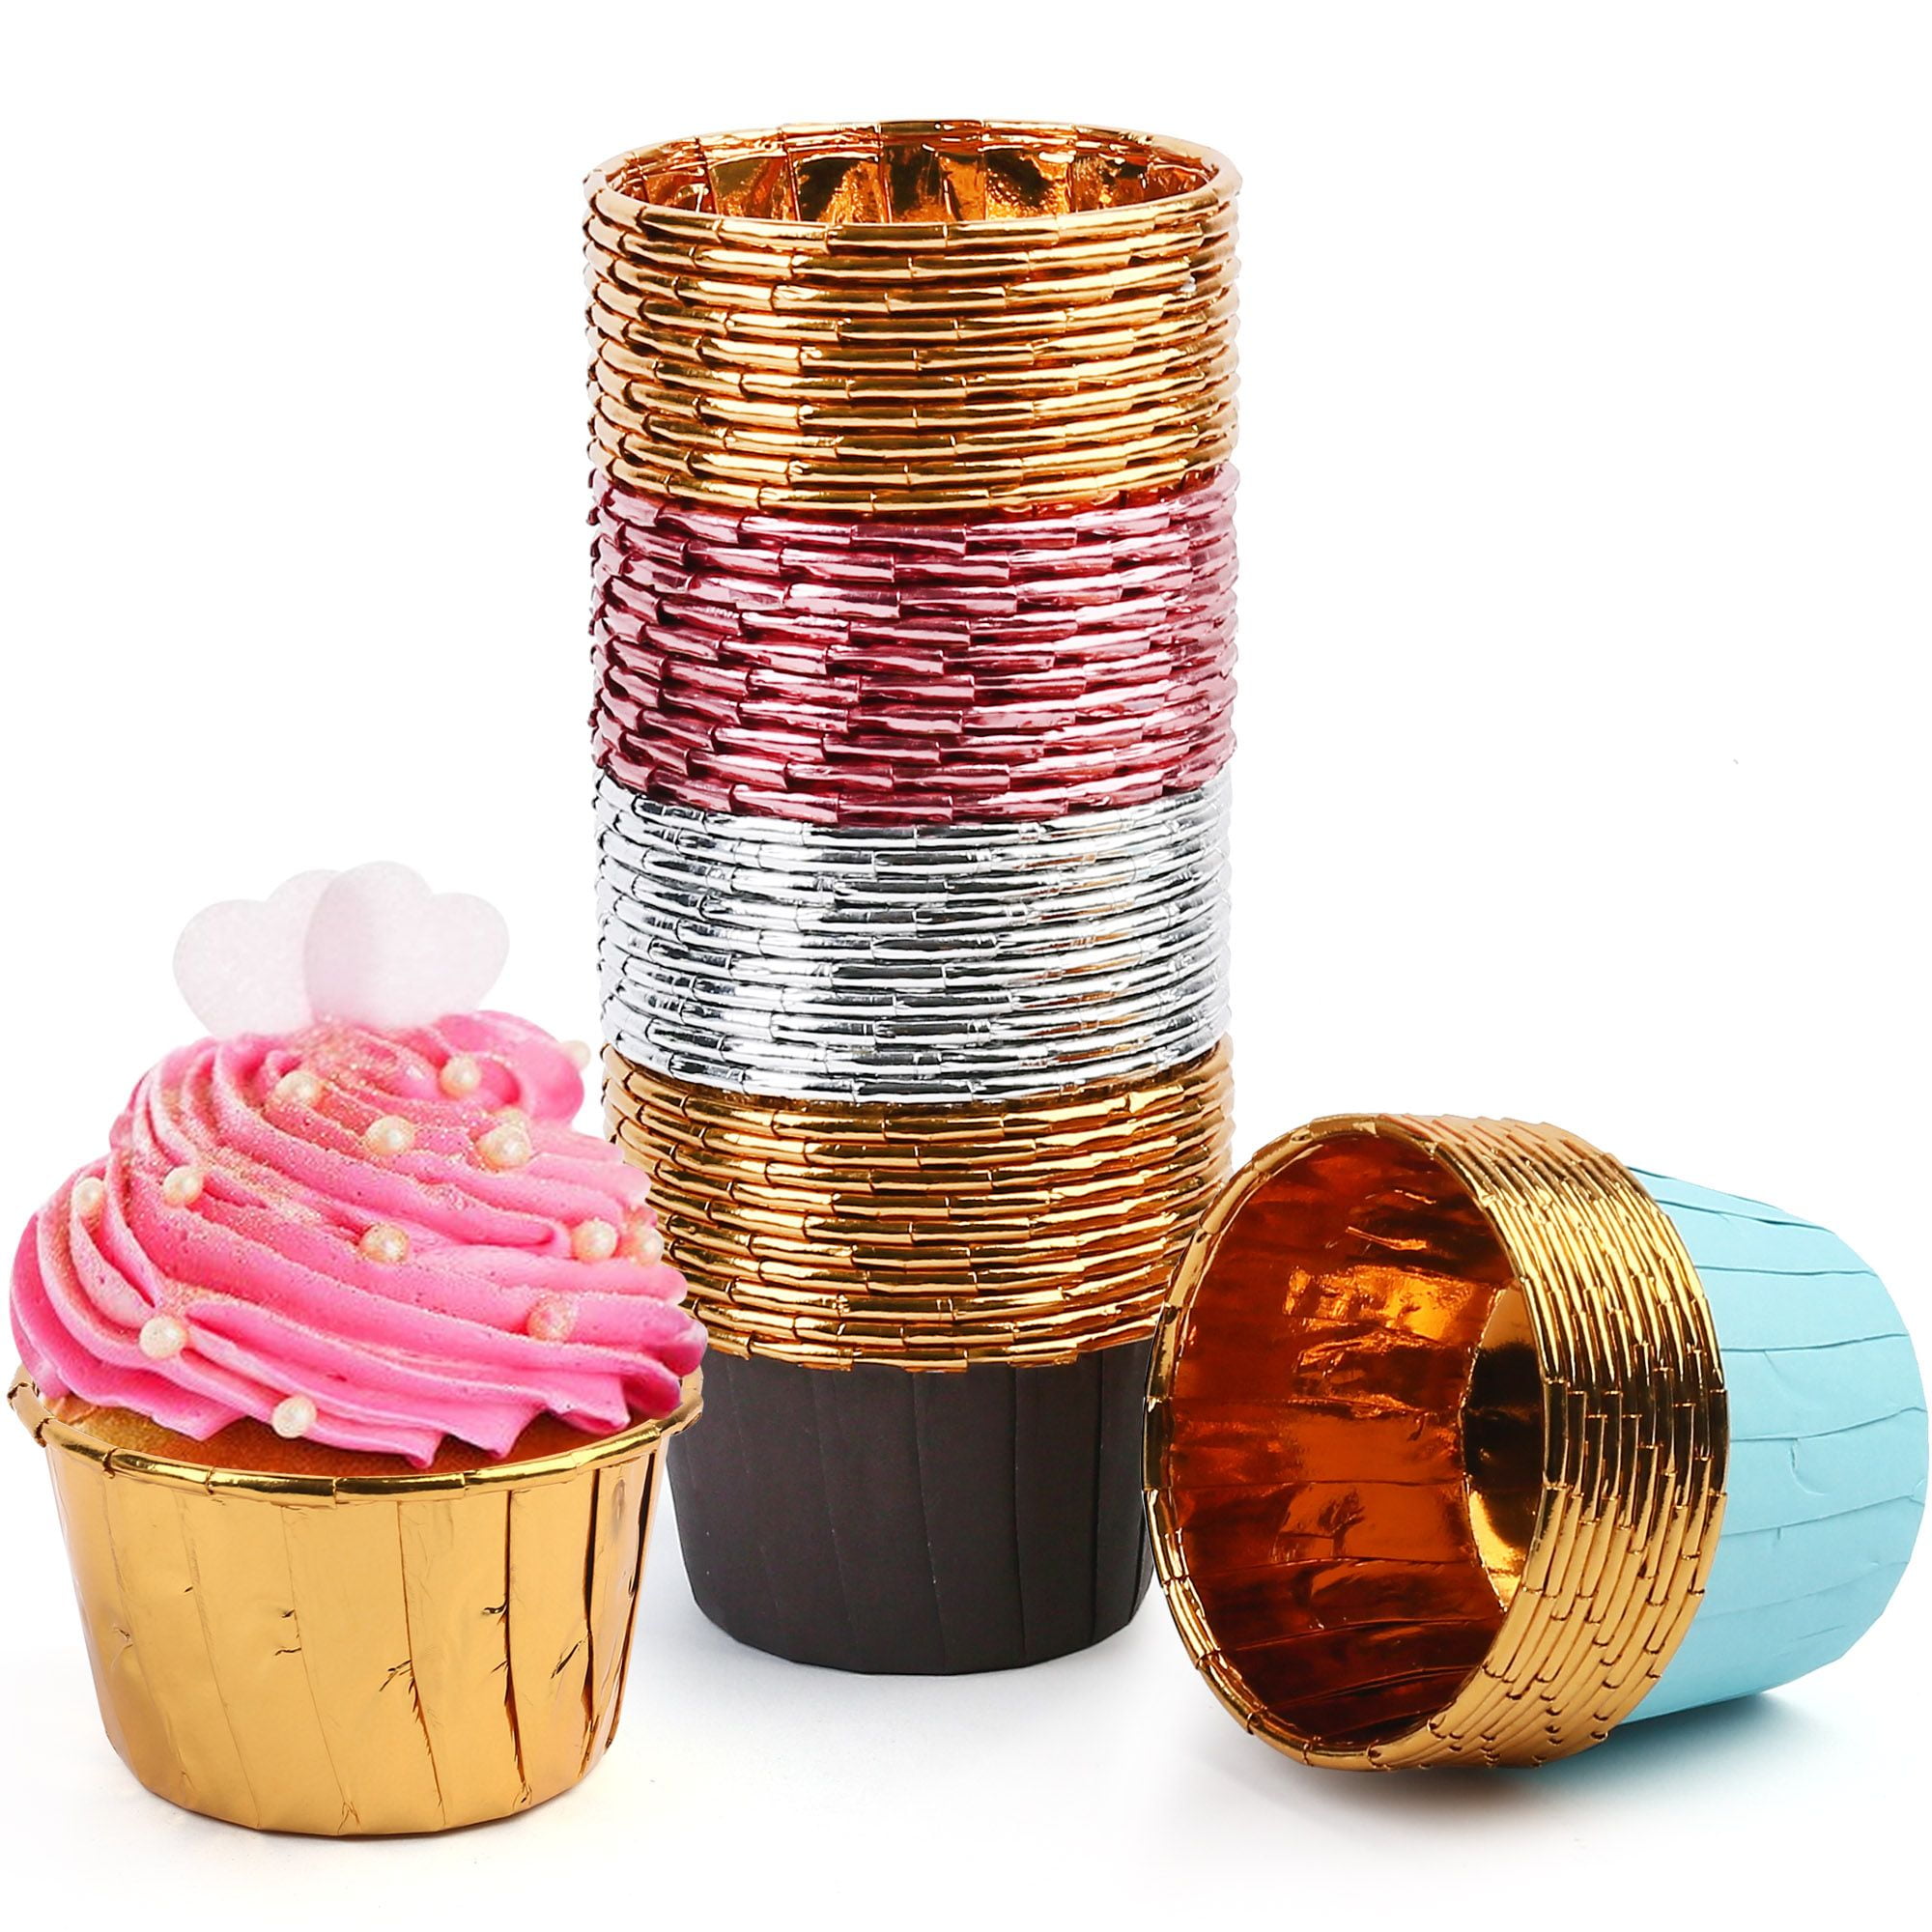 LotFancy 50Pcs Foil Cupcake Liners, Muffin Baking Cups 